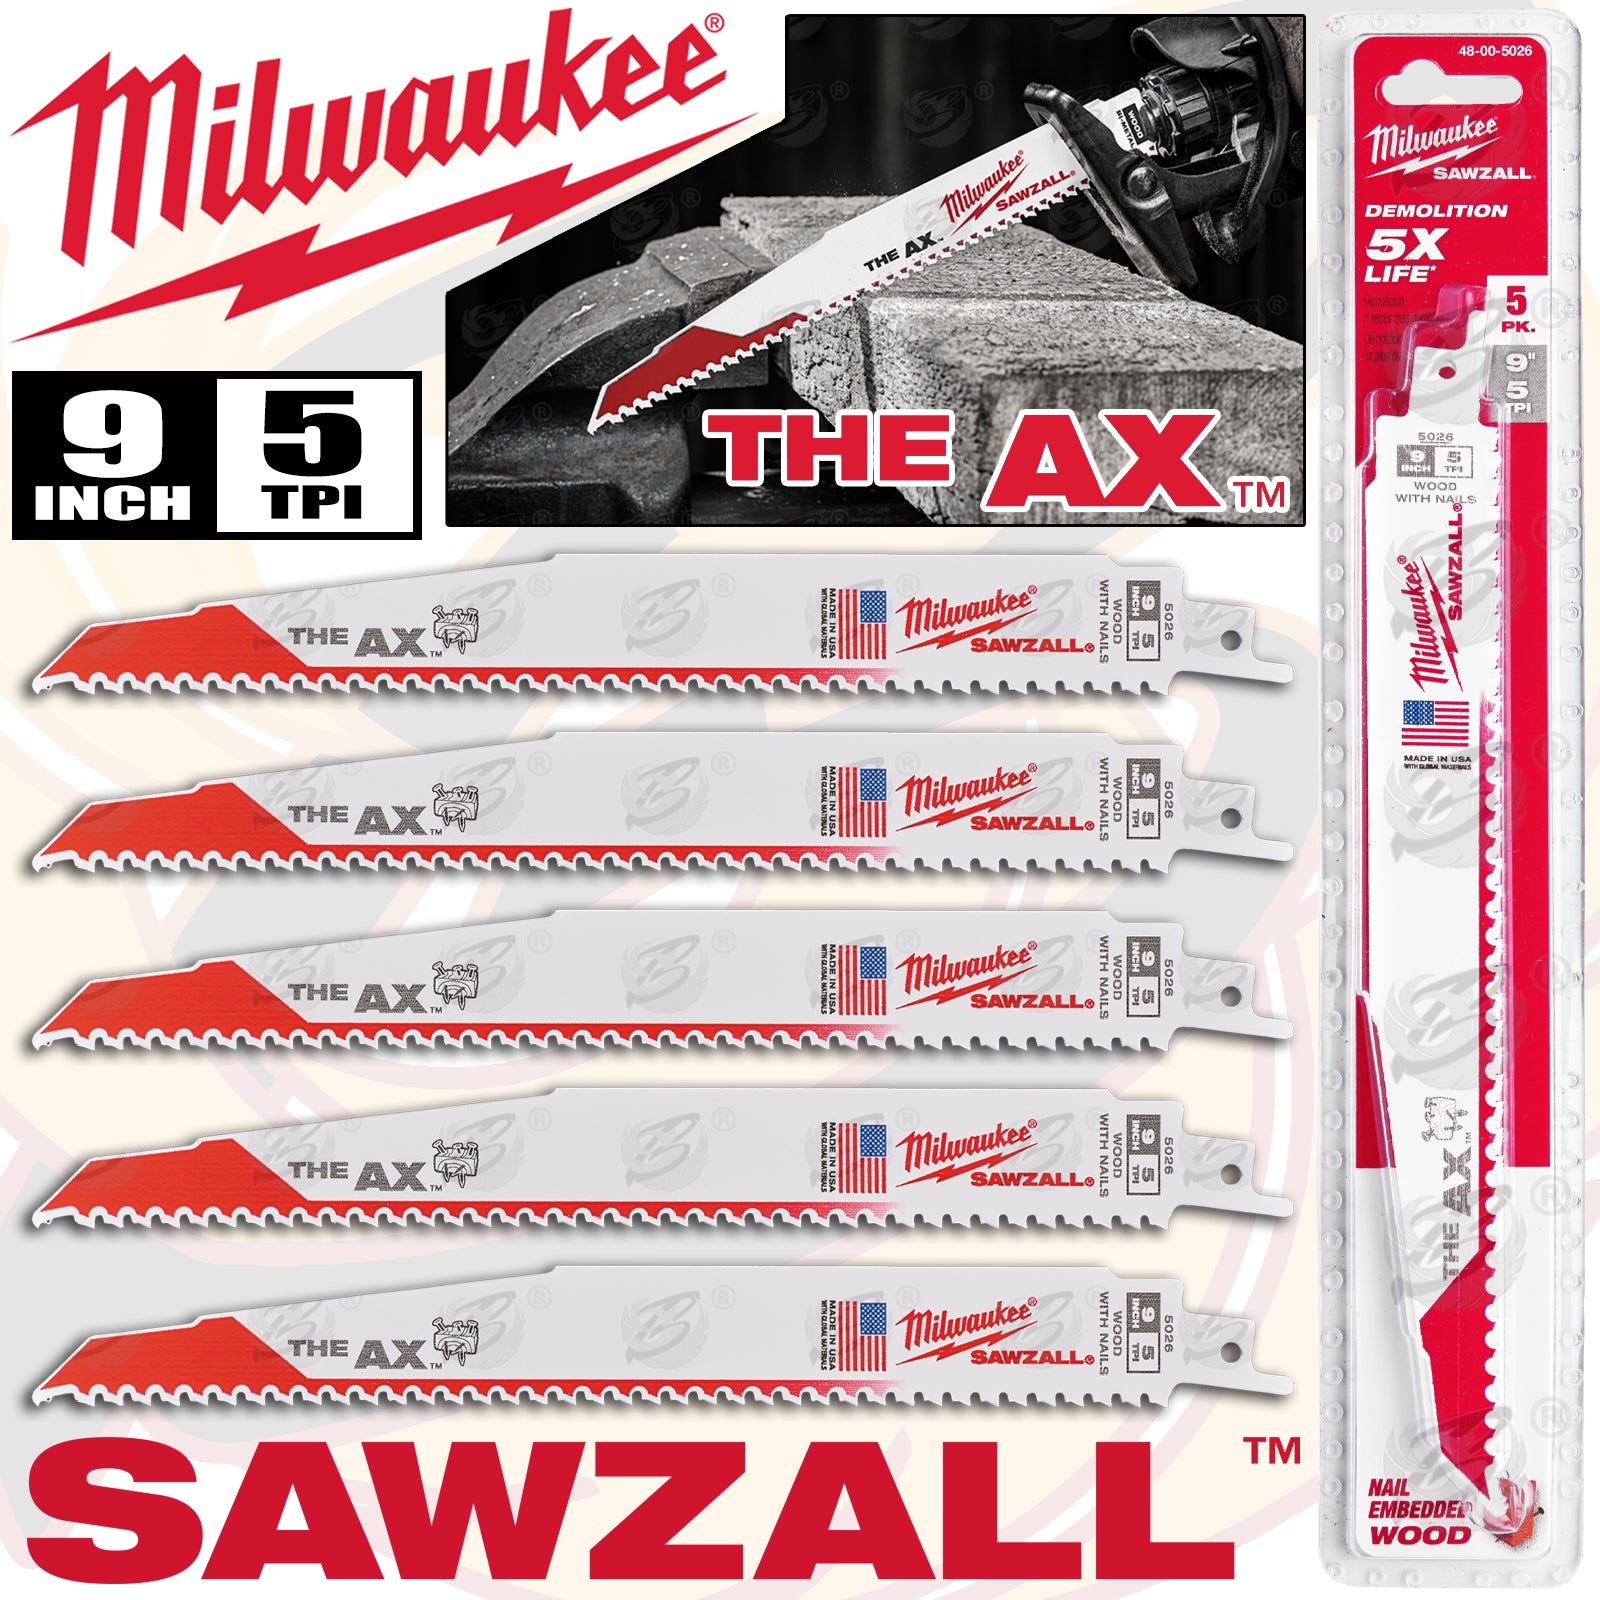 MILWAUKEE SAWZALL RECIPROCATING SAW BLADE 230mm x 5TPI WOOD SAW BLADES ( THE AX ) ( x 5 )